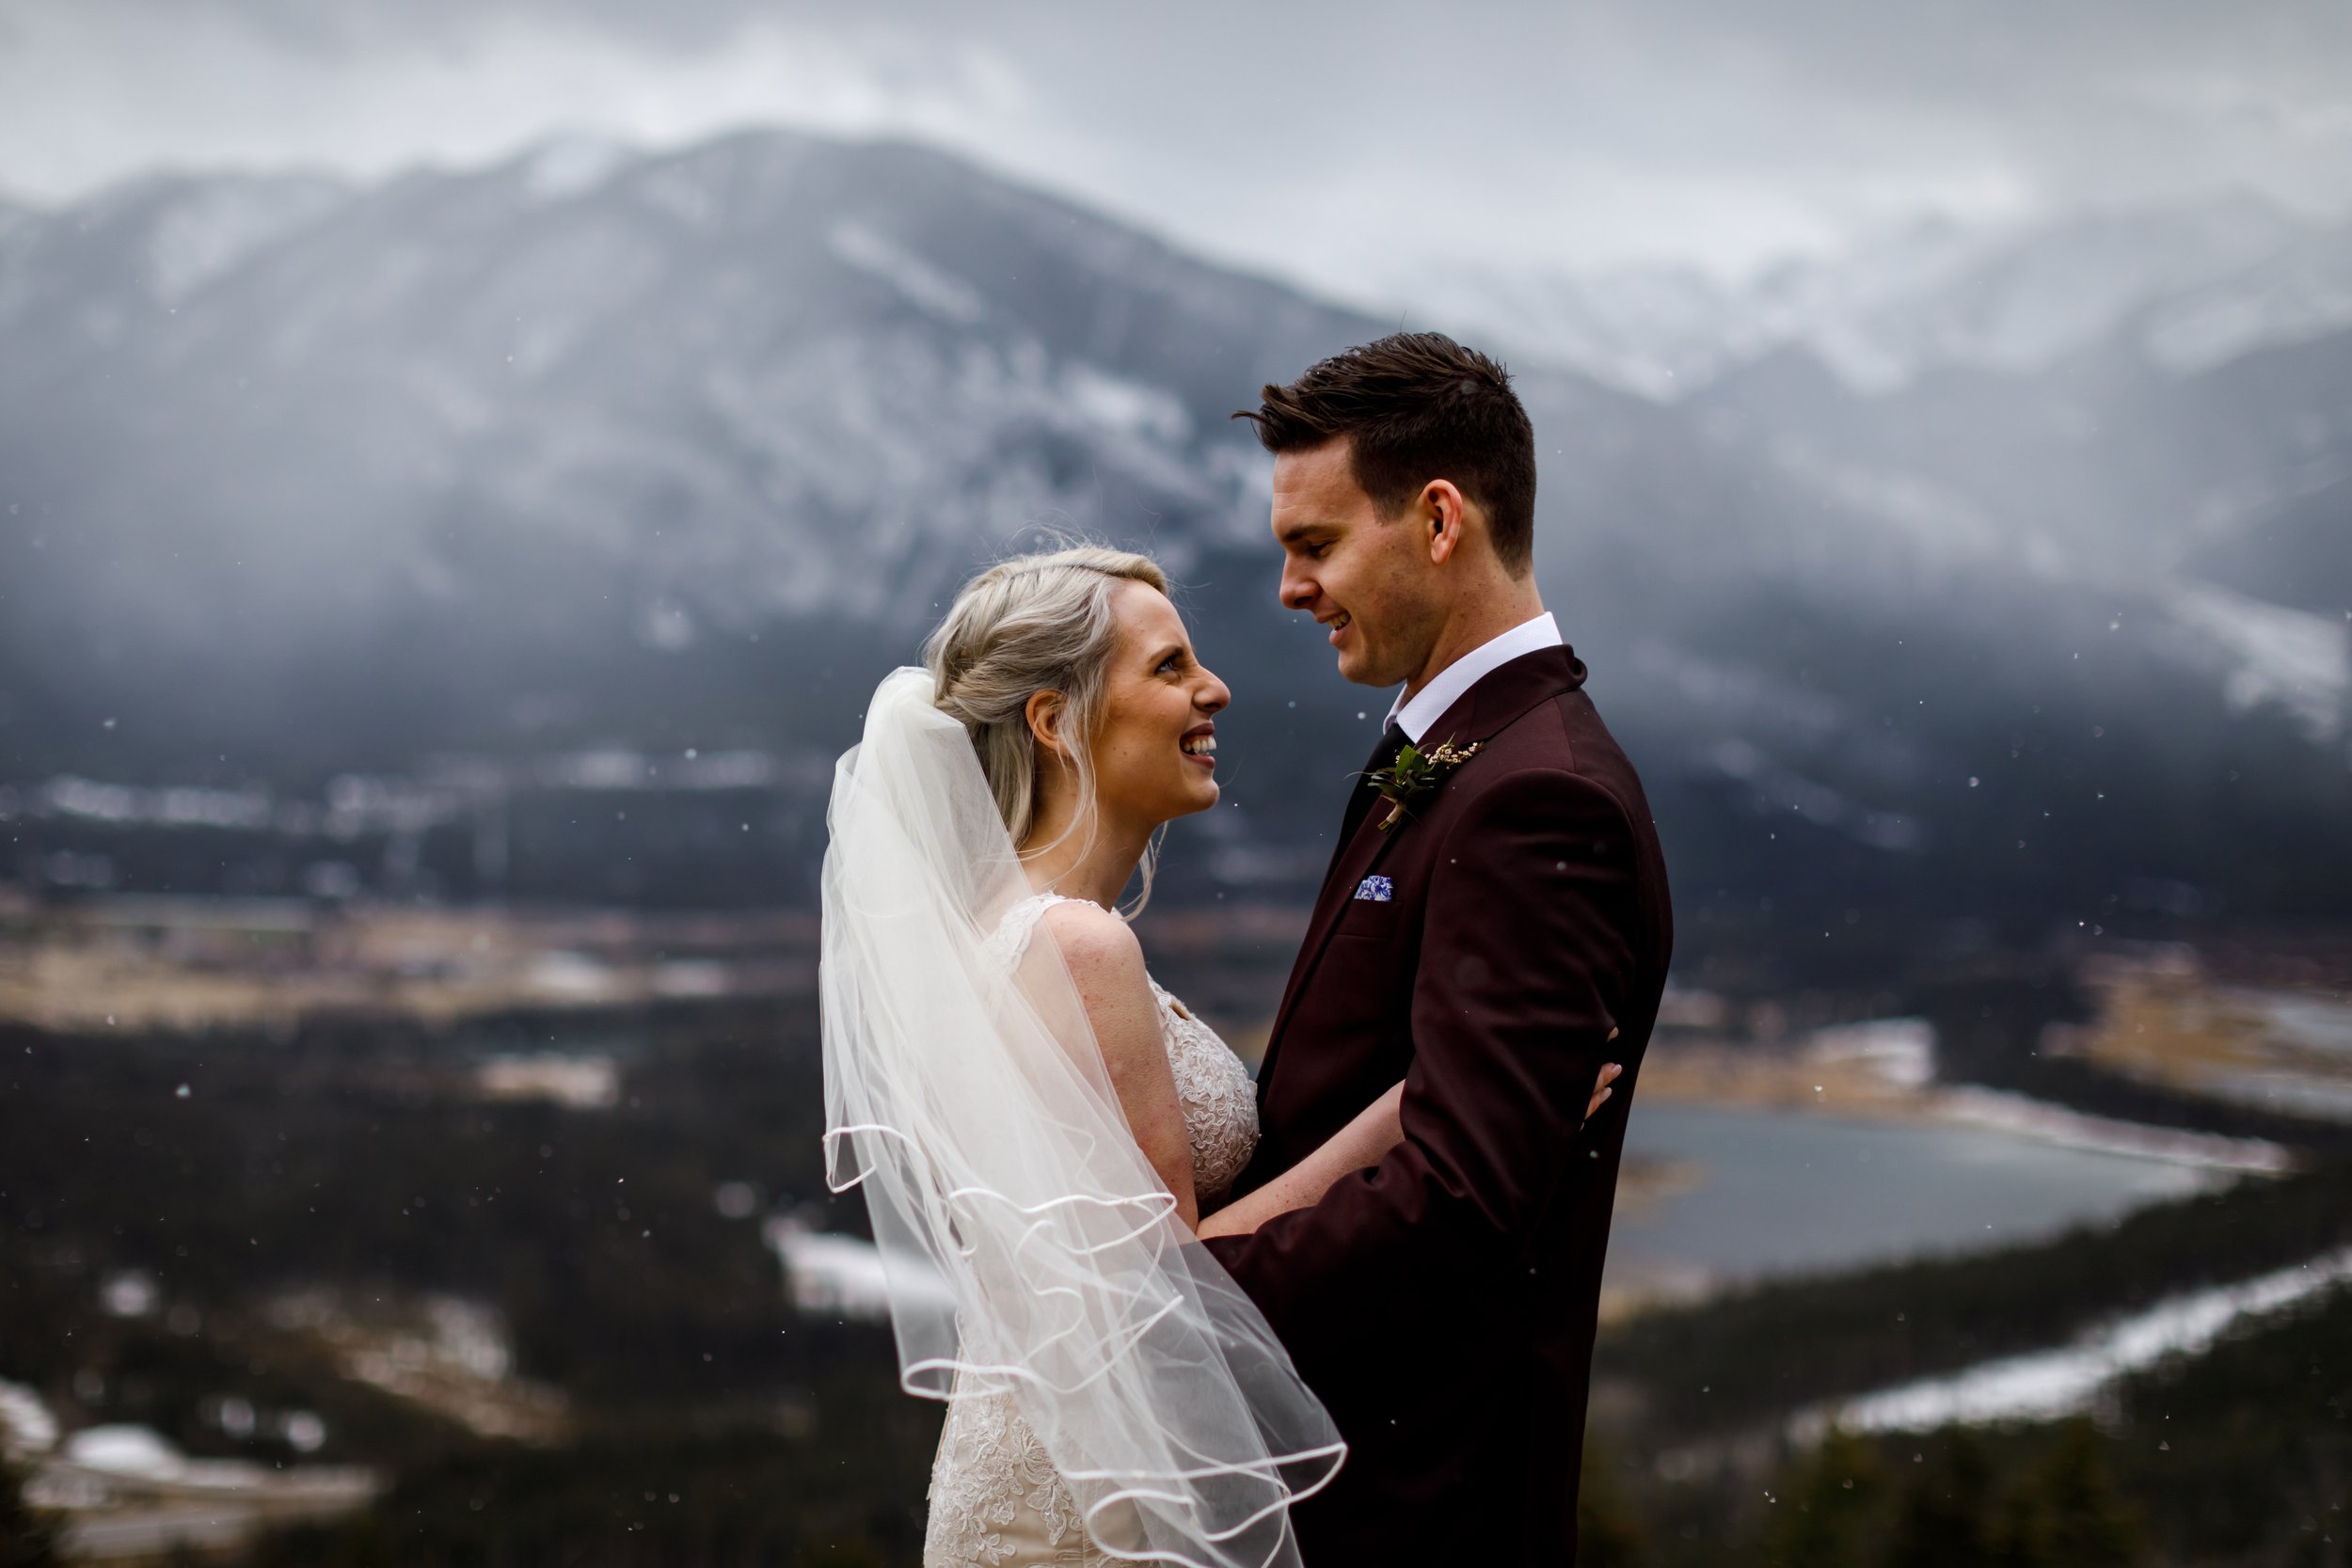  Mt. Norquay Elopement, Banff Wedding Photographer, Vermillion Lakes 